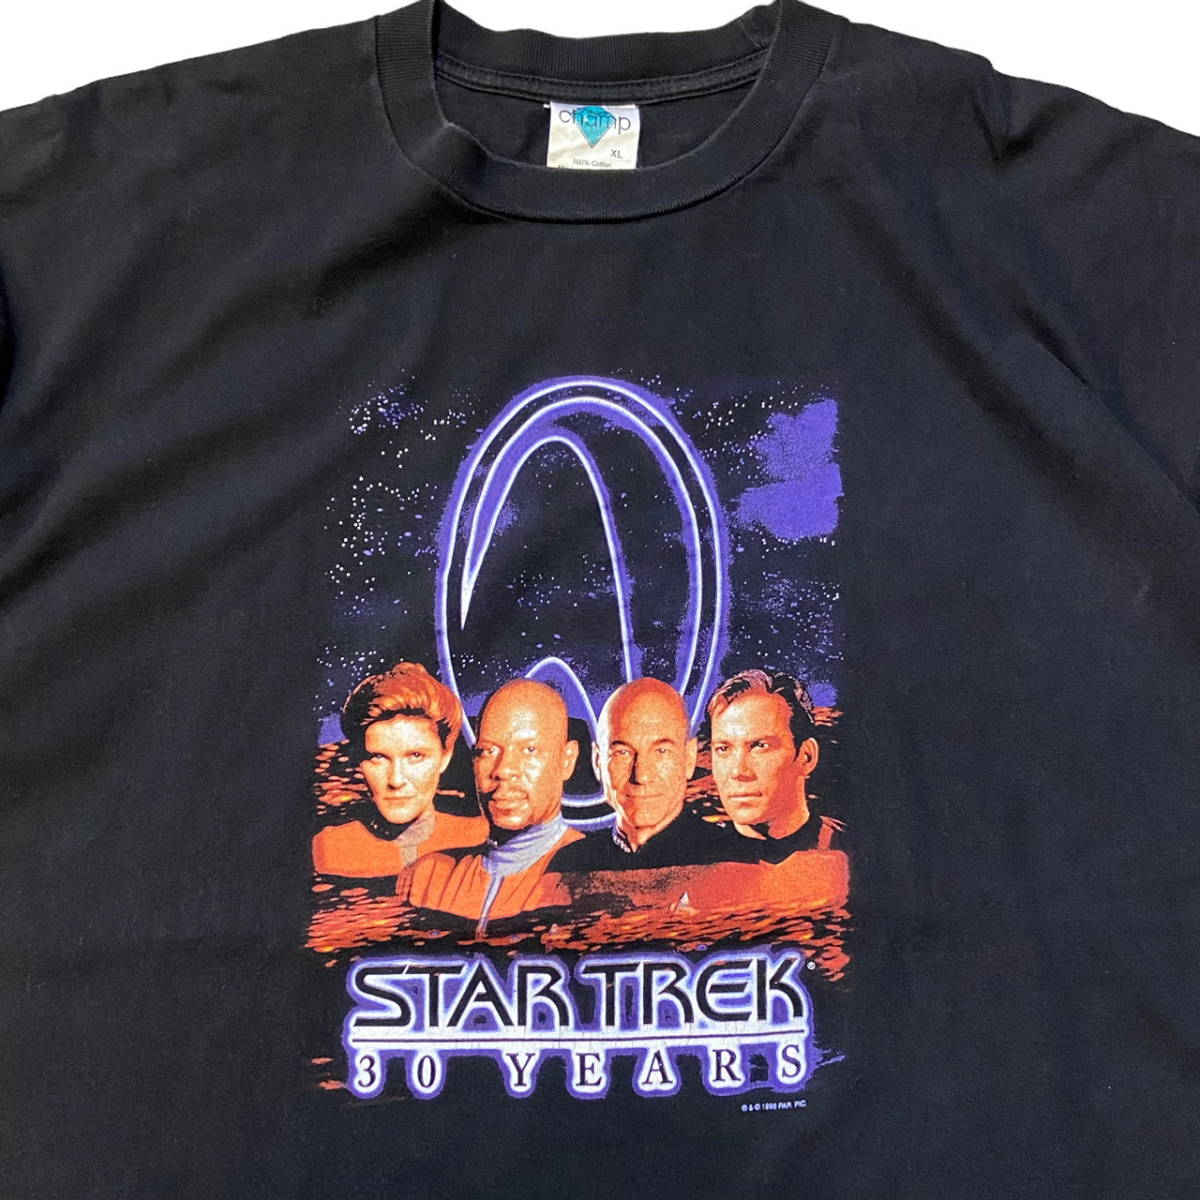 1996 STAR TREK 30YEARS スタートレック Tシャツ XL Star Trek 90s movie 映画 ムービー ロゴ キャラクター ヴィンテージ